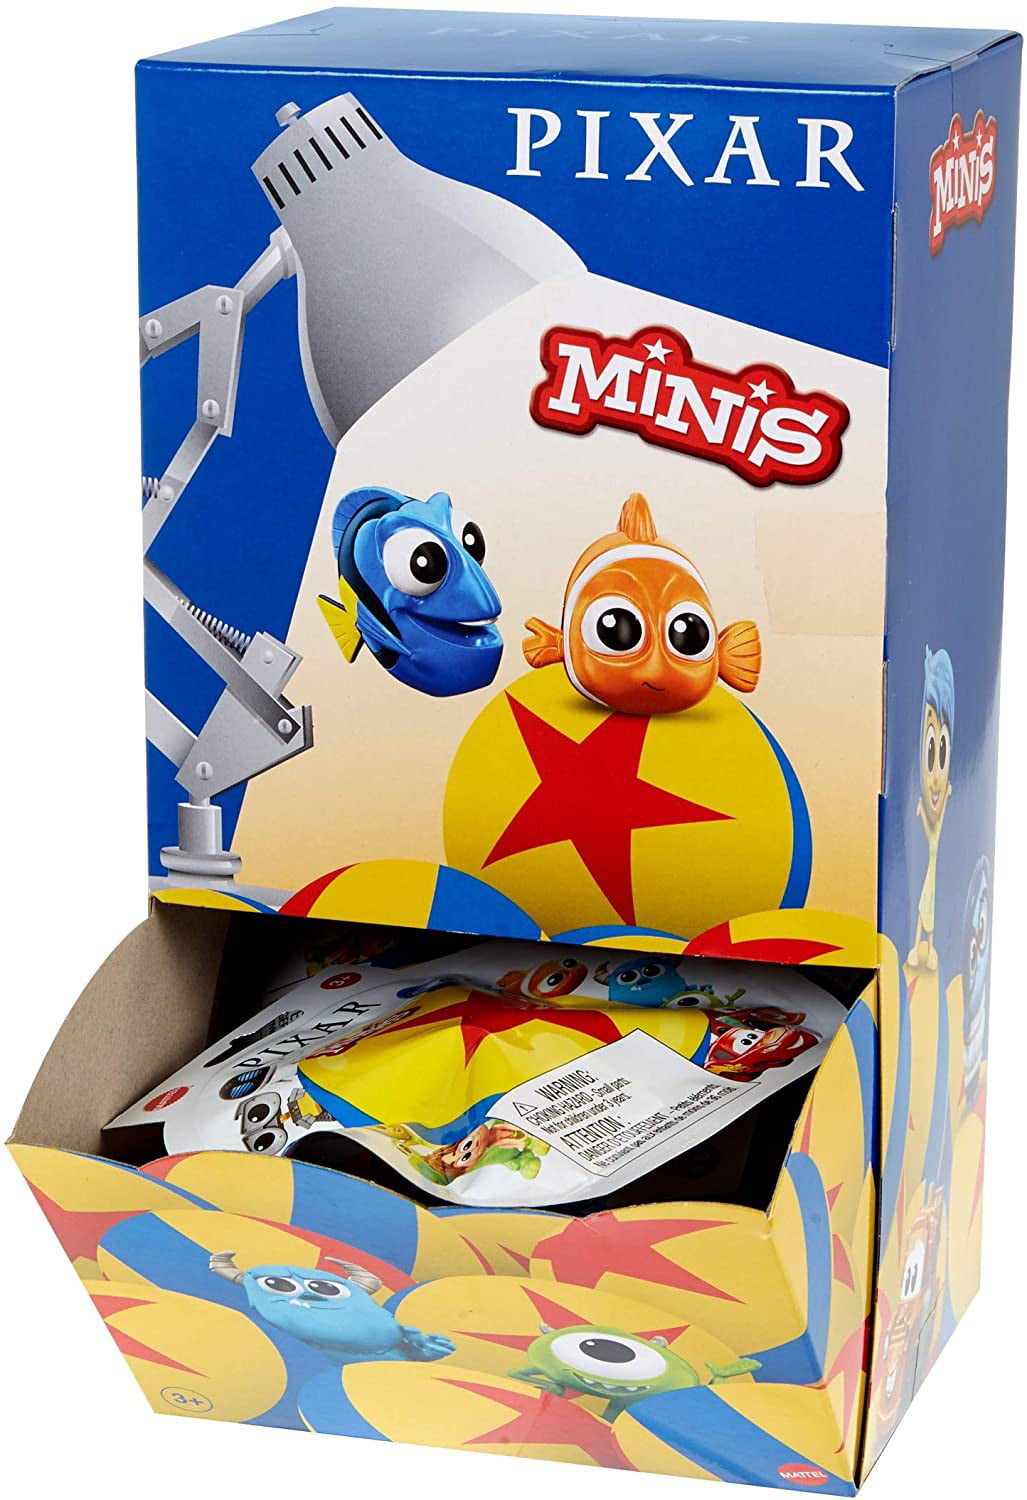 Pixar Minis Blind Bags Mattel Disney Figures 4 Figurines 2019 NISP for sale online 